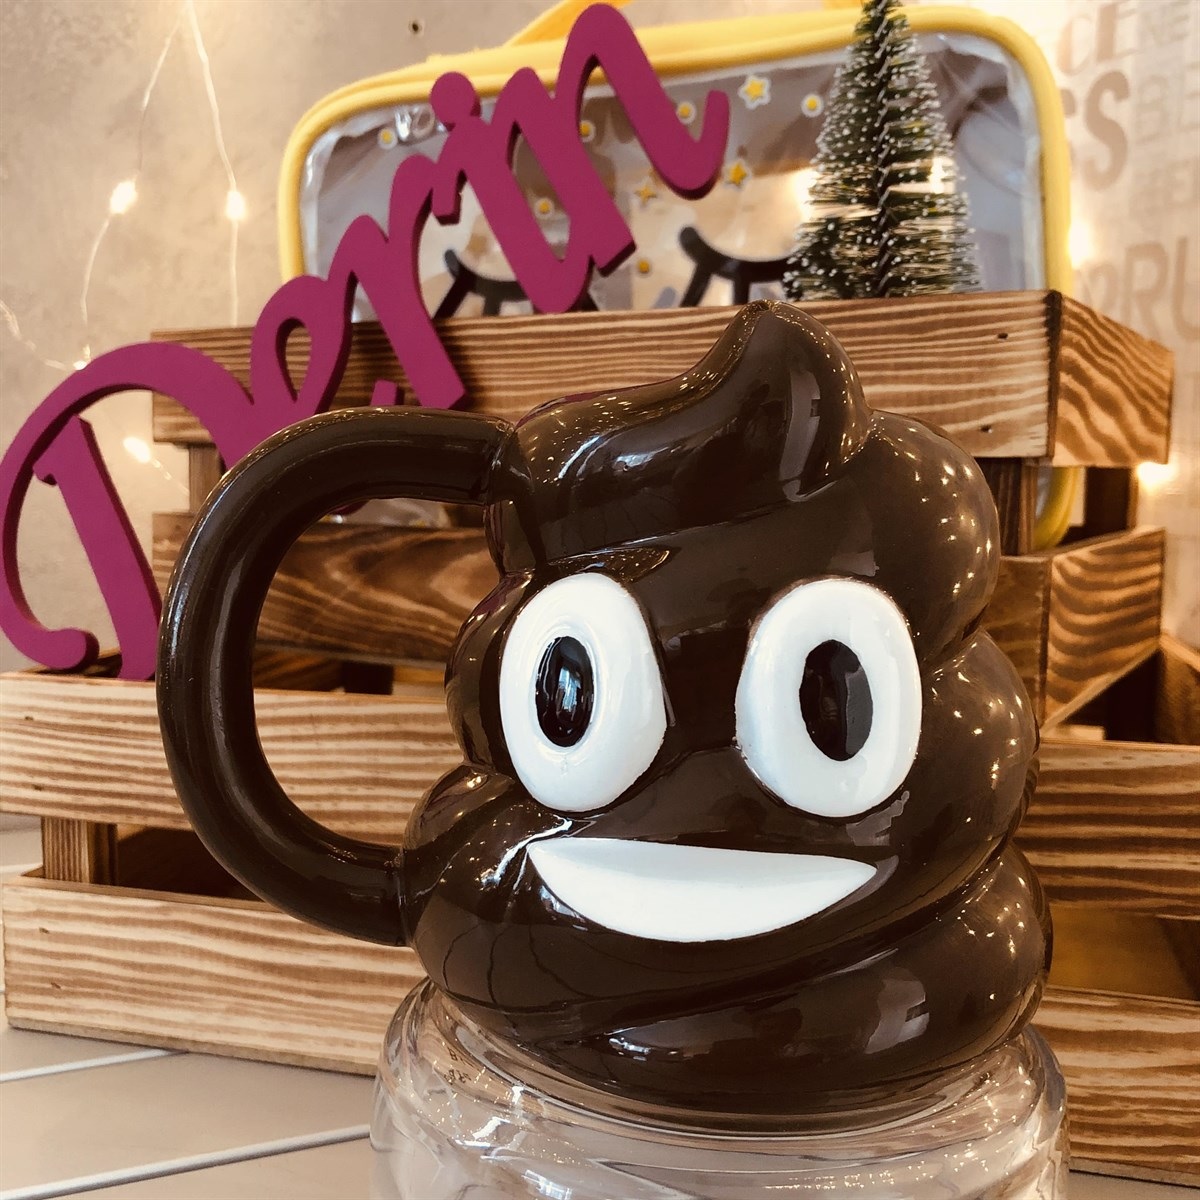 3d Poo Mug Funny Mug Funny Gift for Friends 